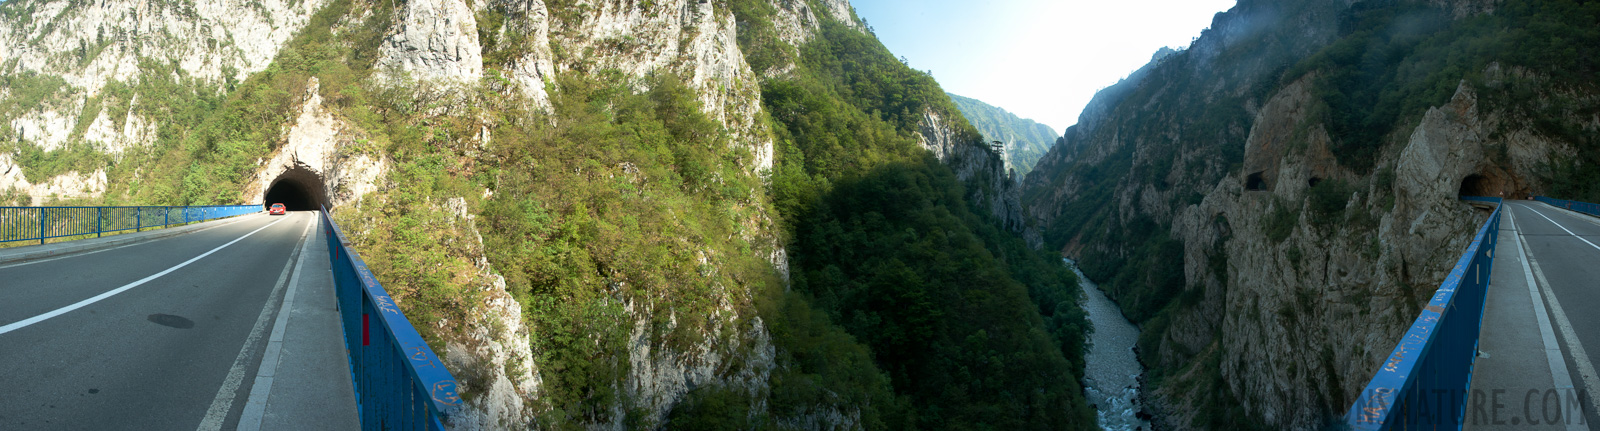 Montenegro -  [28 mm, 1/200 sec at f / 9.0, ISO 1000]